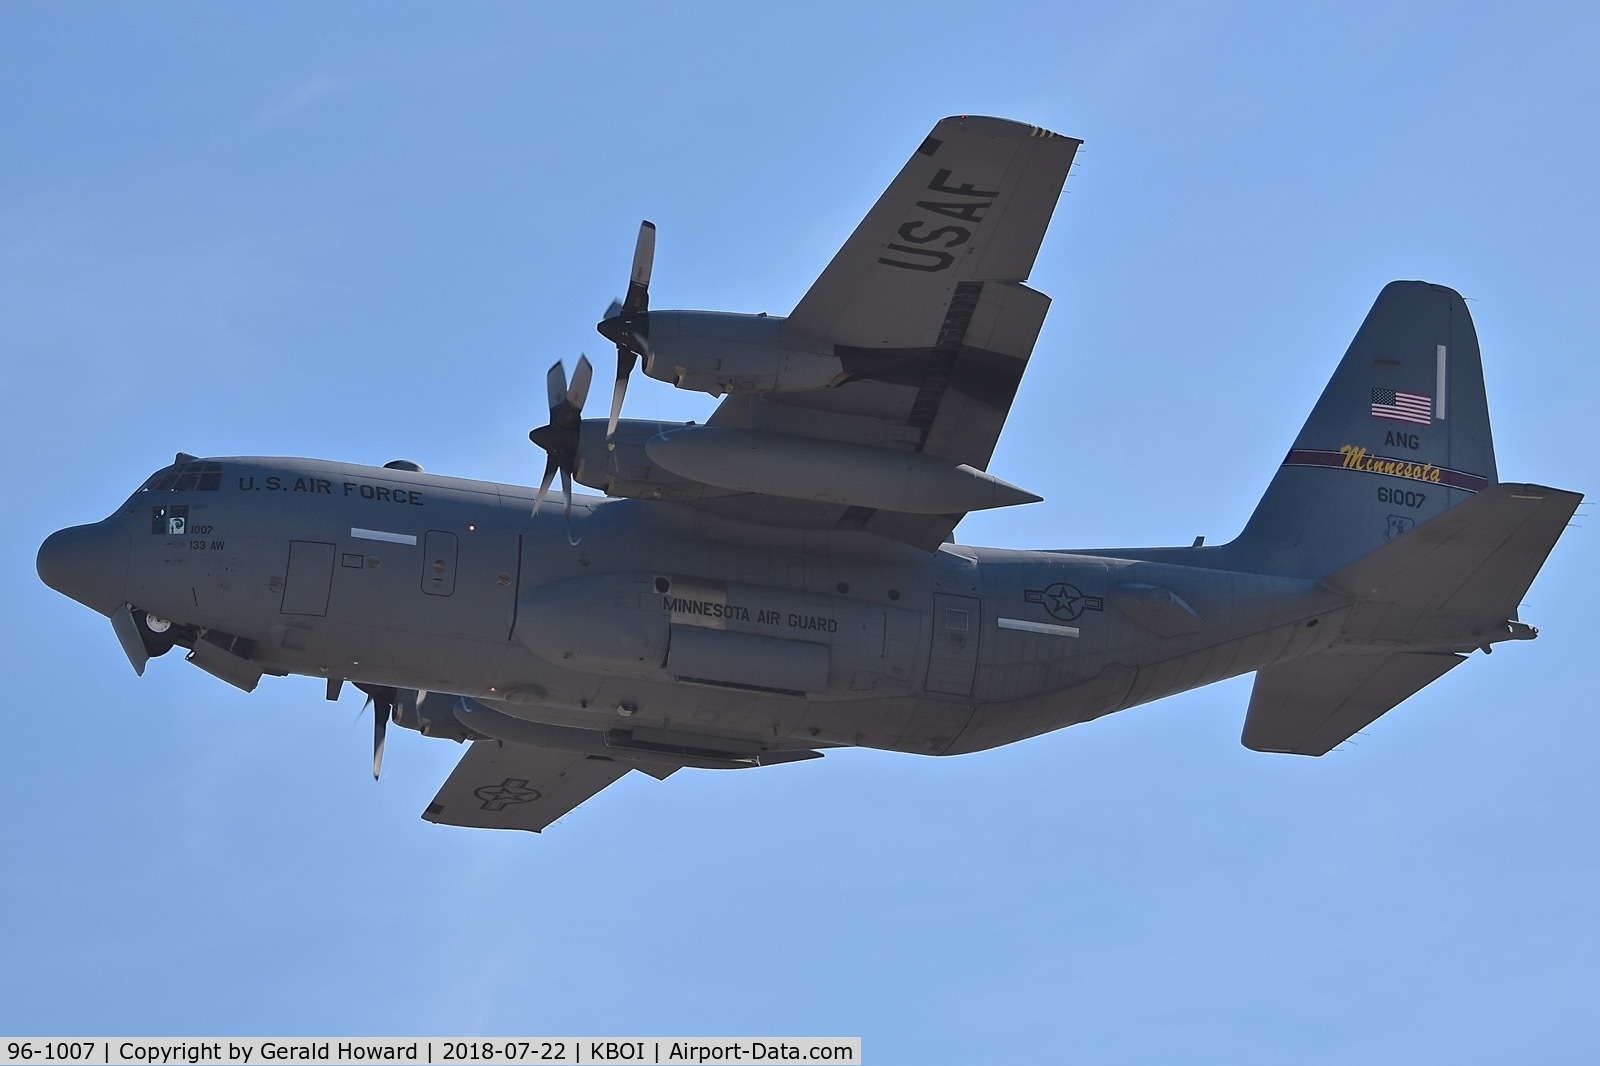 96-1007, 1996 Lockheed C-130H Hercules C/N 382-5427, 133rd Air Wing, Minnesota ANG.